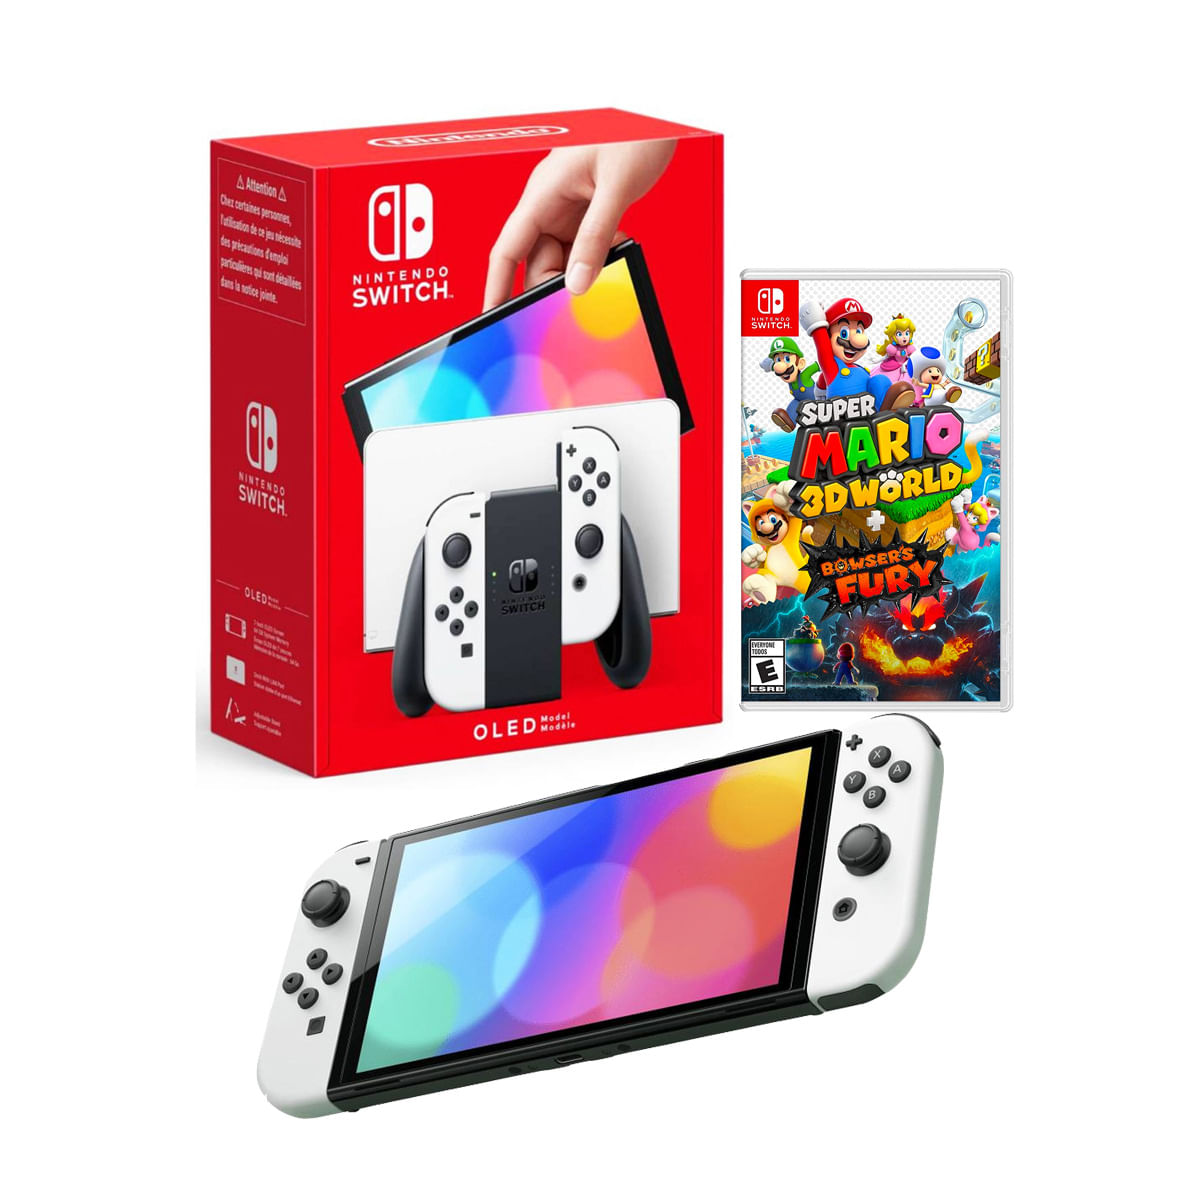 Consola Nintendo Switch Oled Blanco + Mario 3D World Bowser Fury